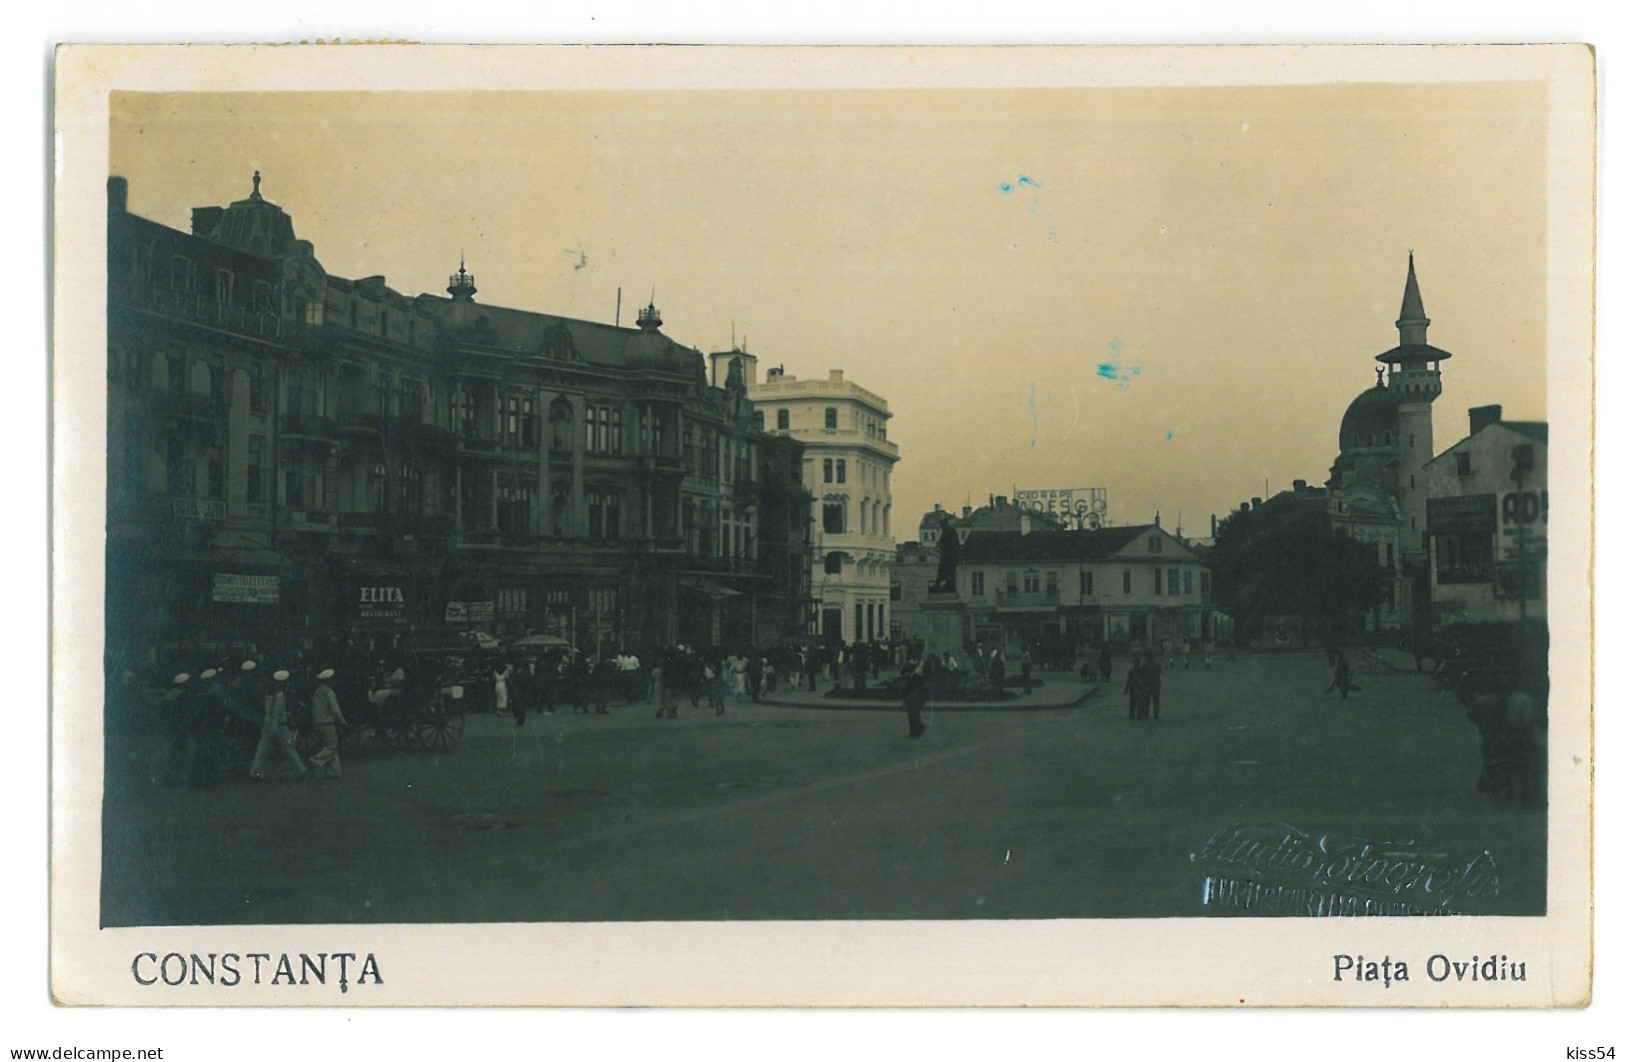 RO 68 - 22571 CONSTANTA, Market, Romania - Old Postcard, Real Photo - Used - 1935 - Rumänien